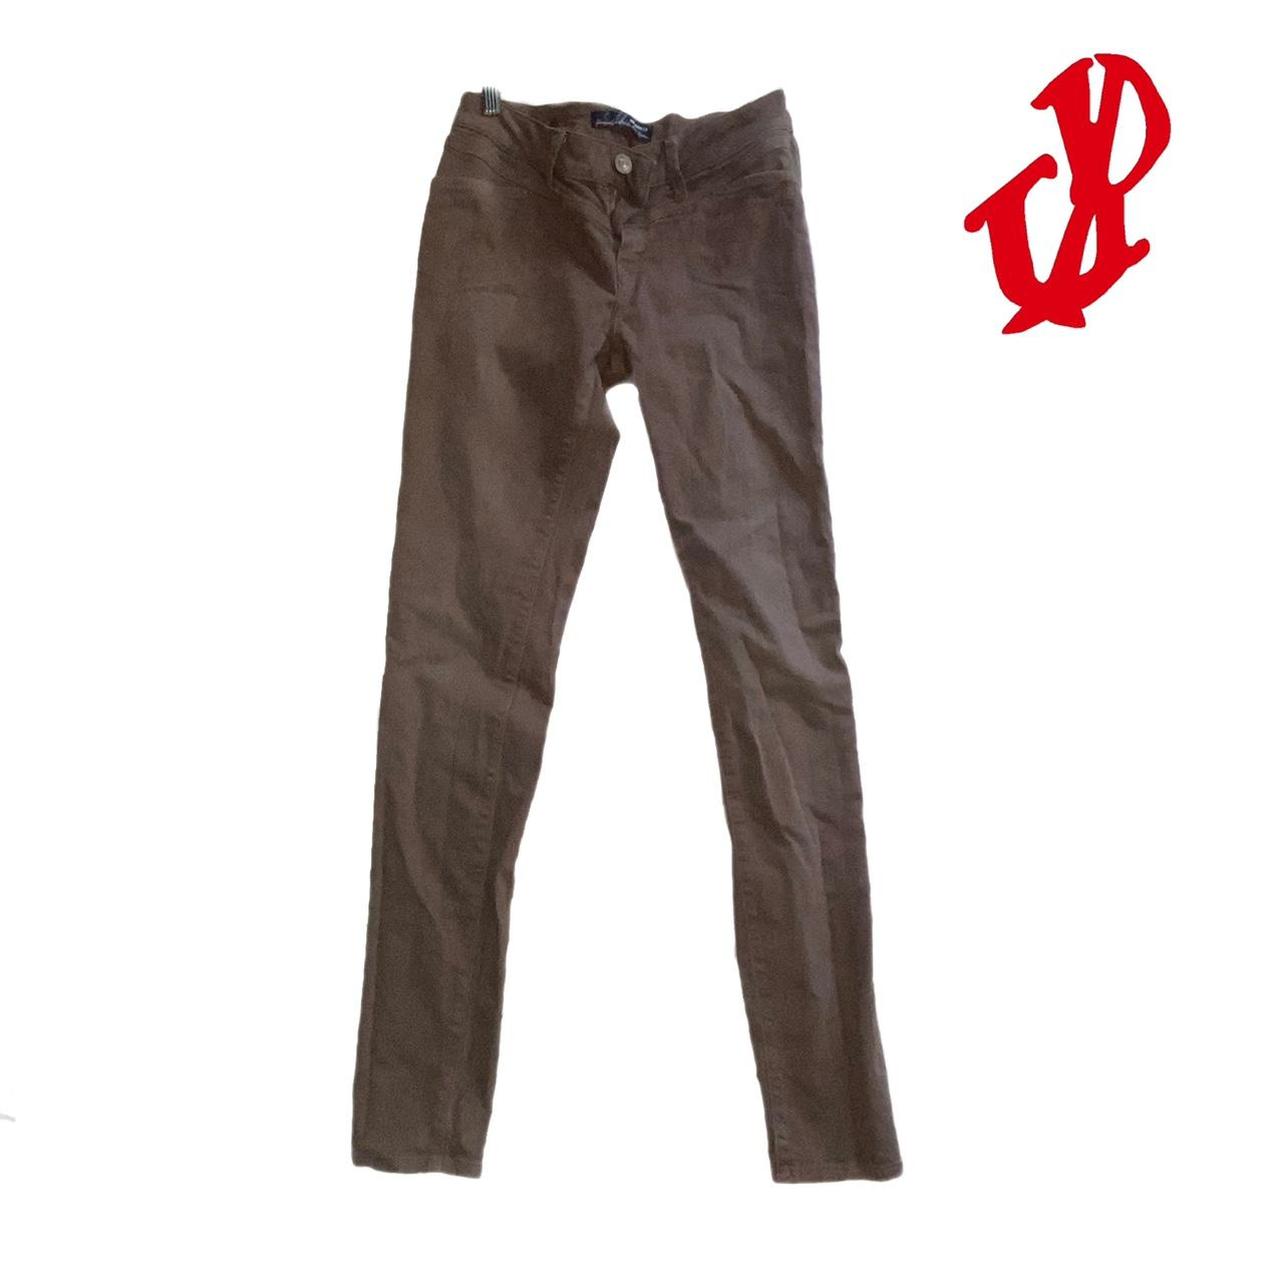 Product Image 2 - Mavi  Mocha Jeans

CONDITION: Used